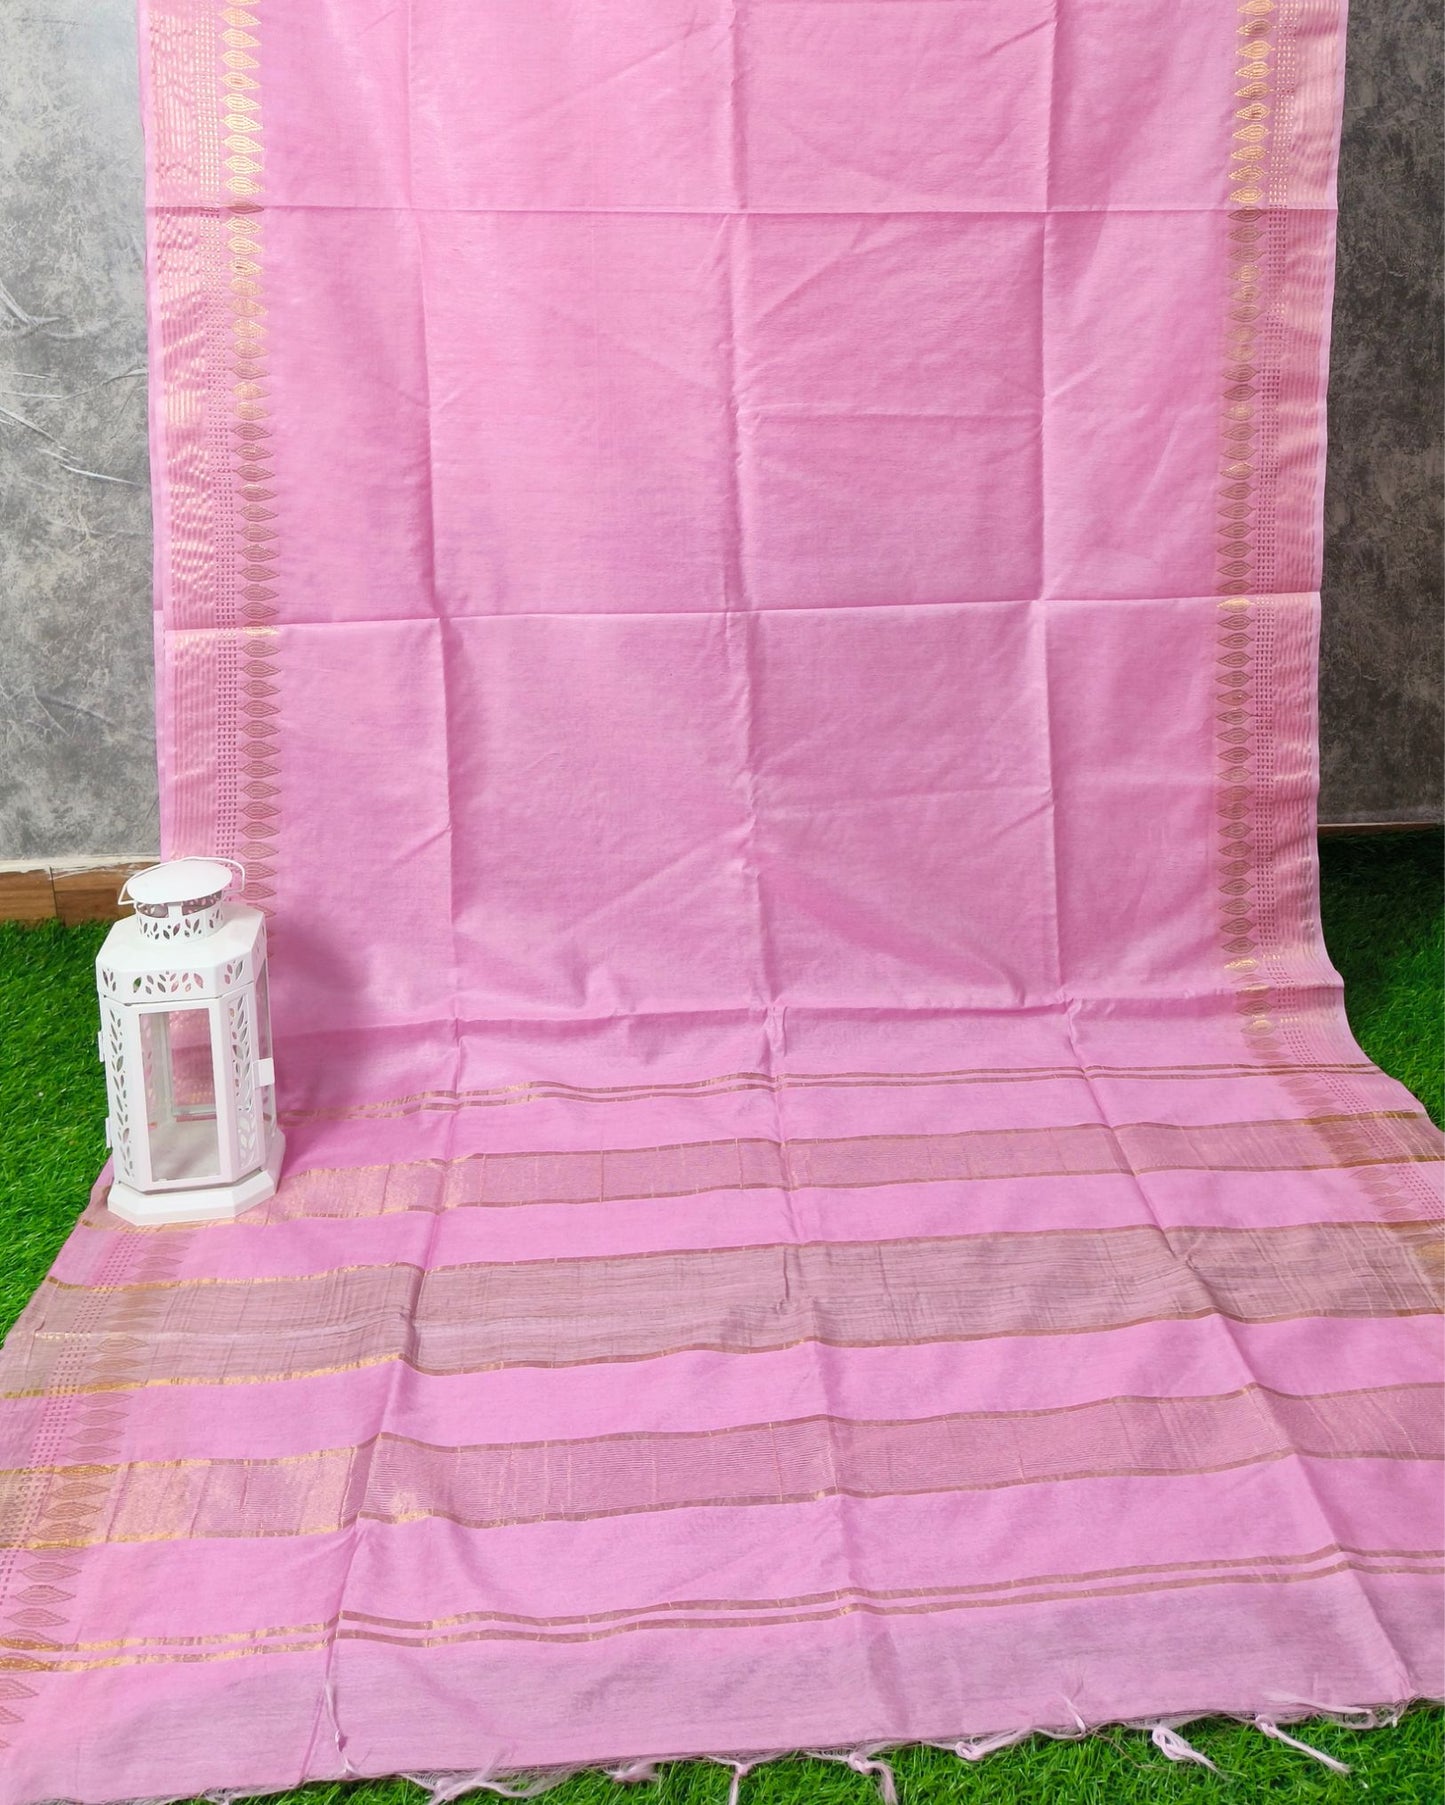 Handcrafted Colorful Kota Silk Pink Jacquard Saree